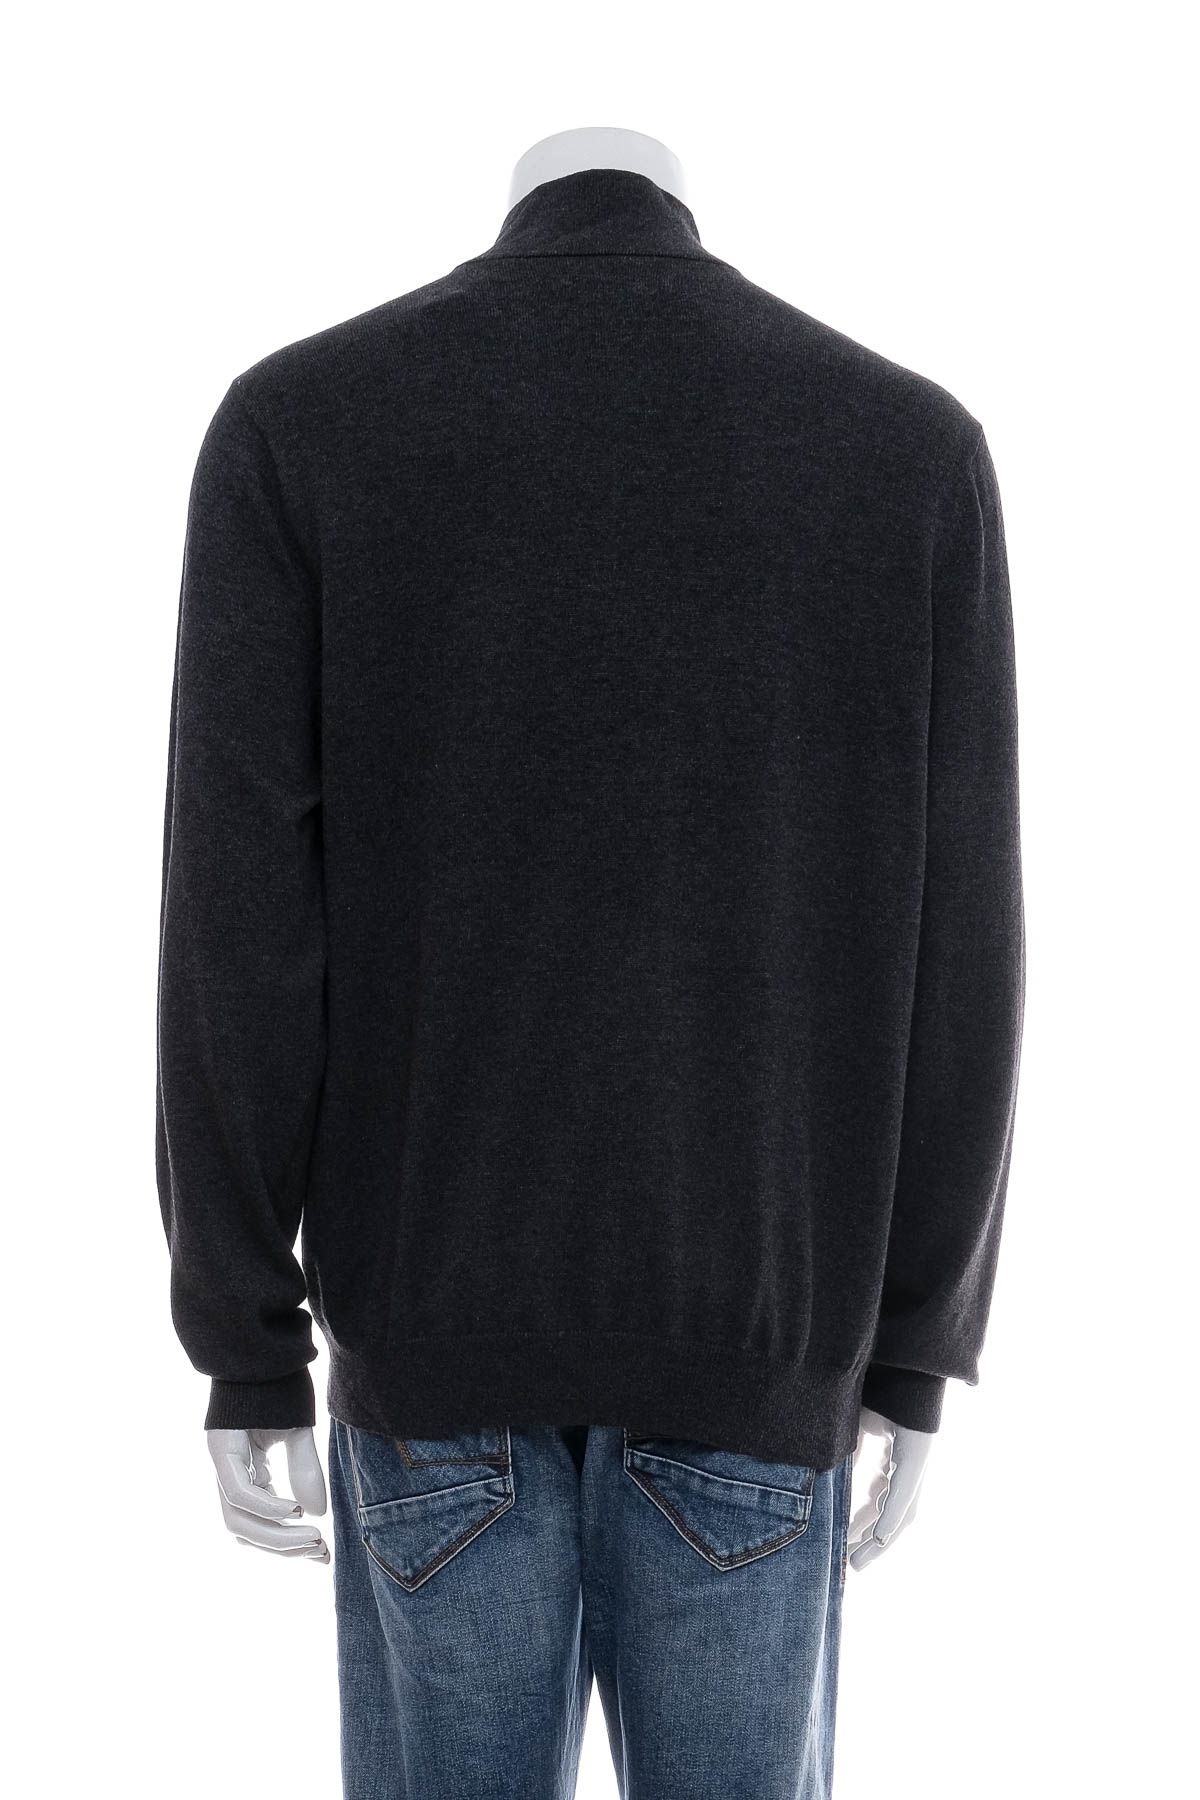 Men's sweater - Perry Ellis - 1